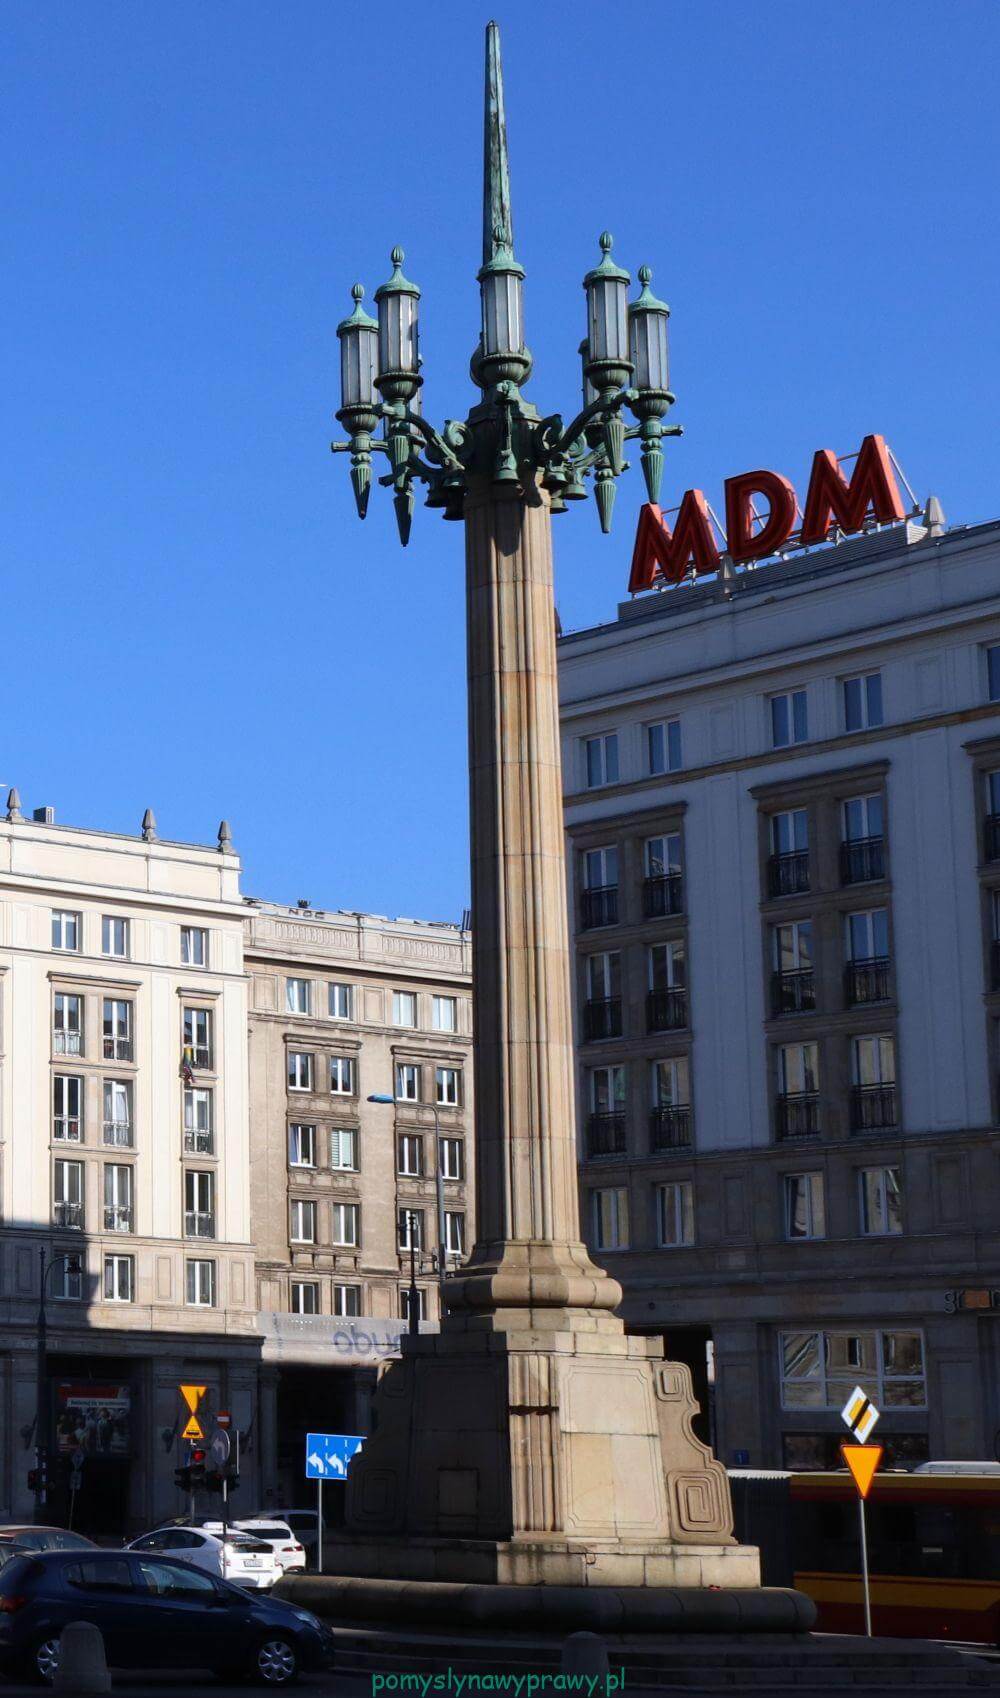 MDM Warszawa